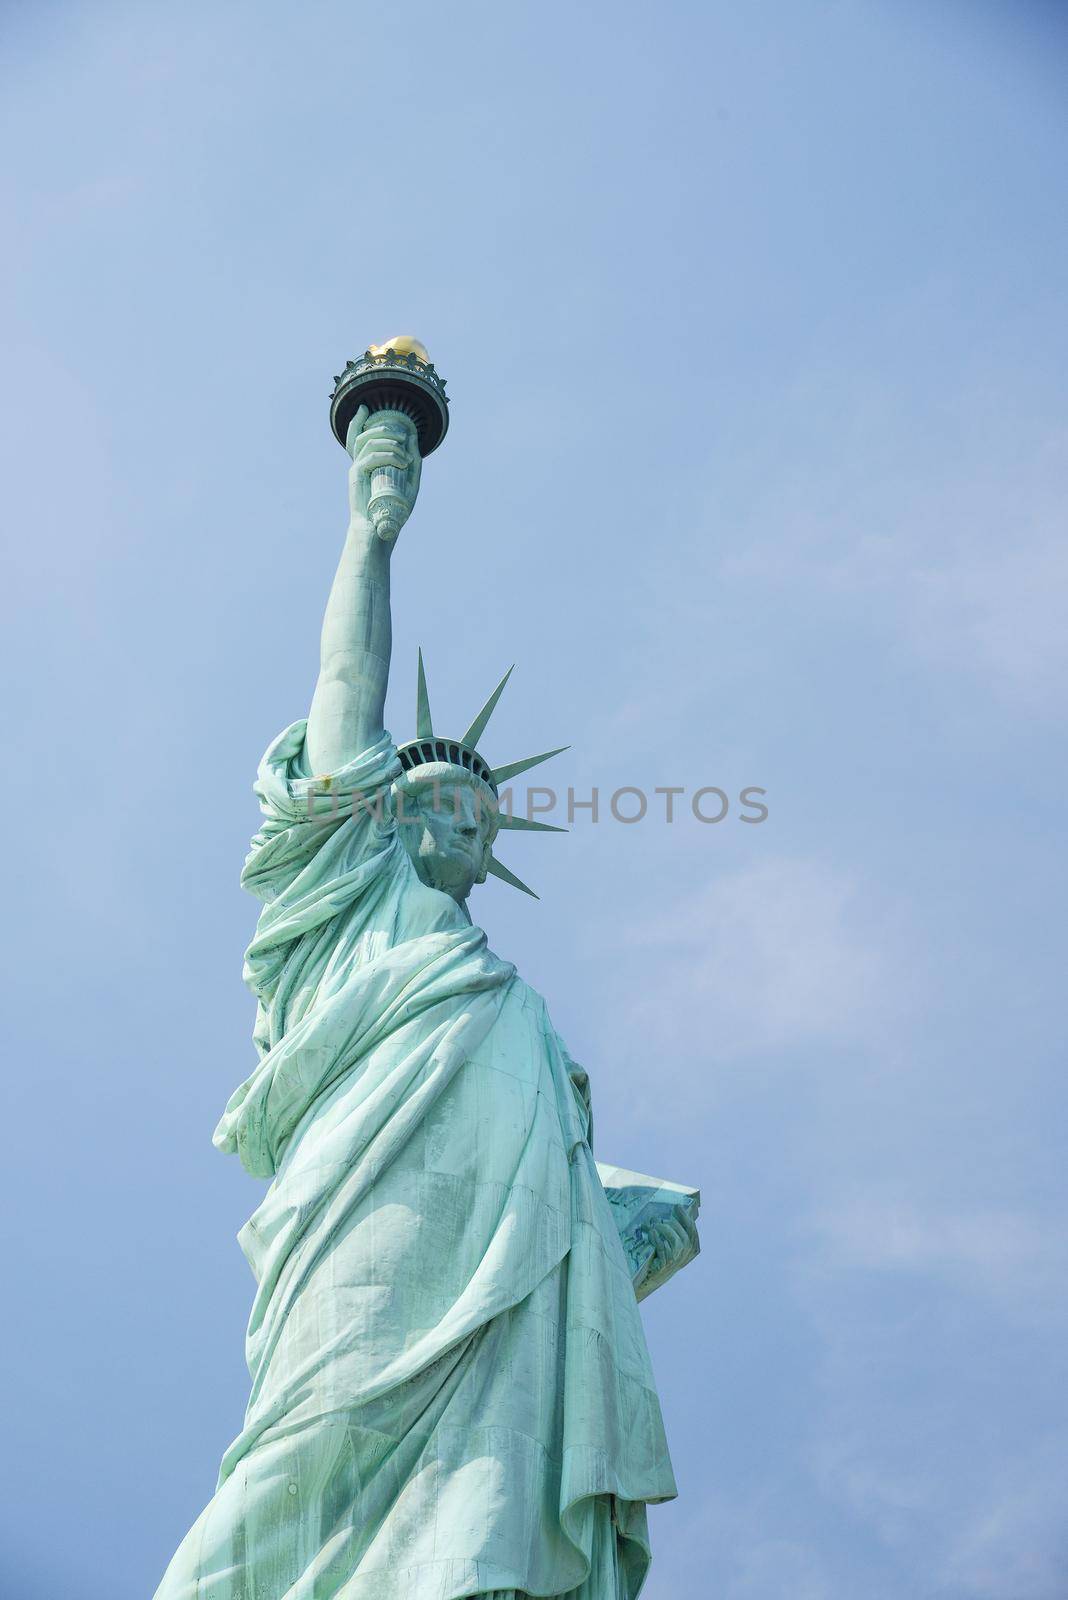 Liberty Statue by porbital